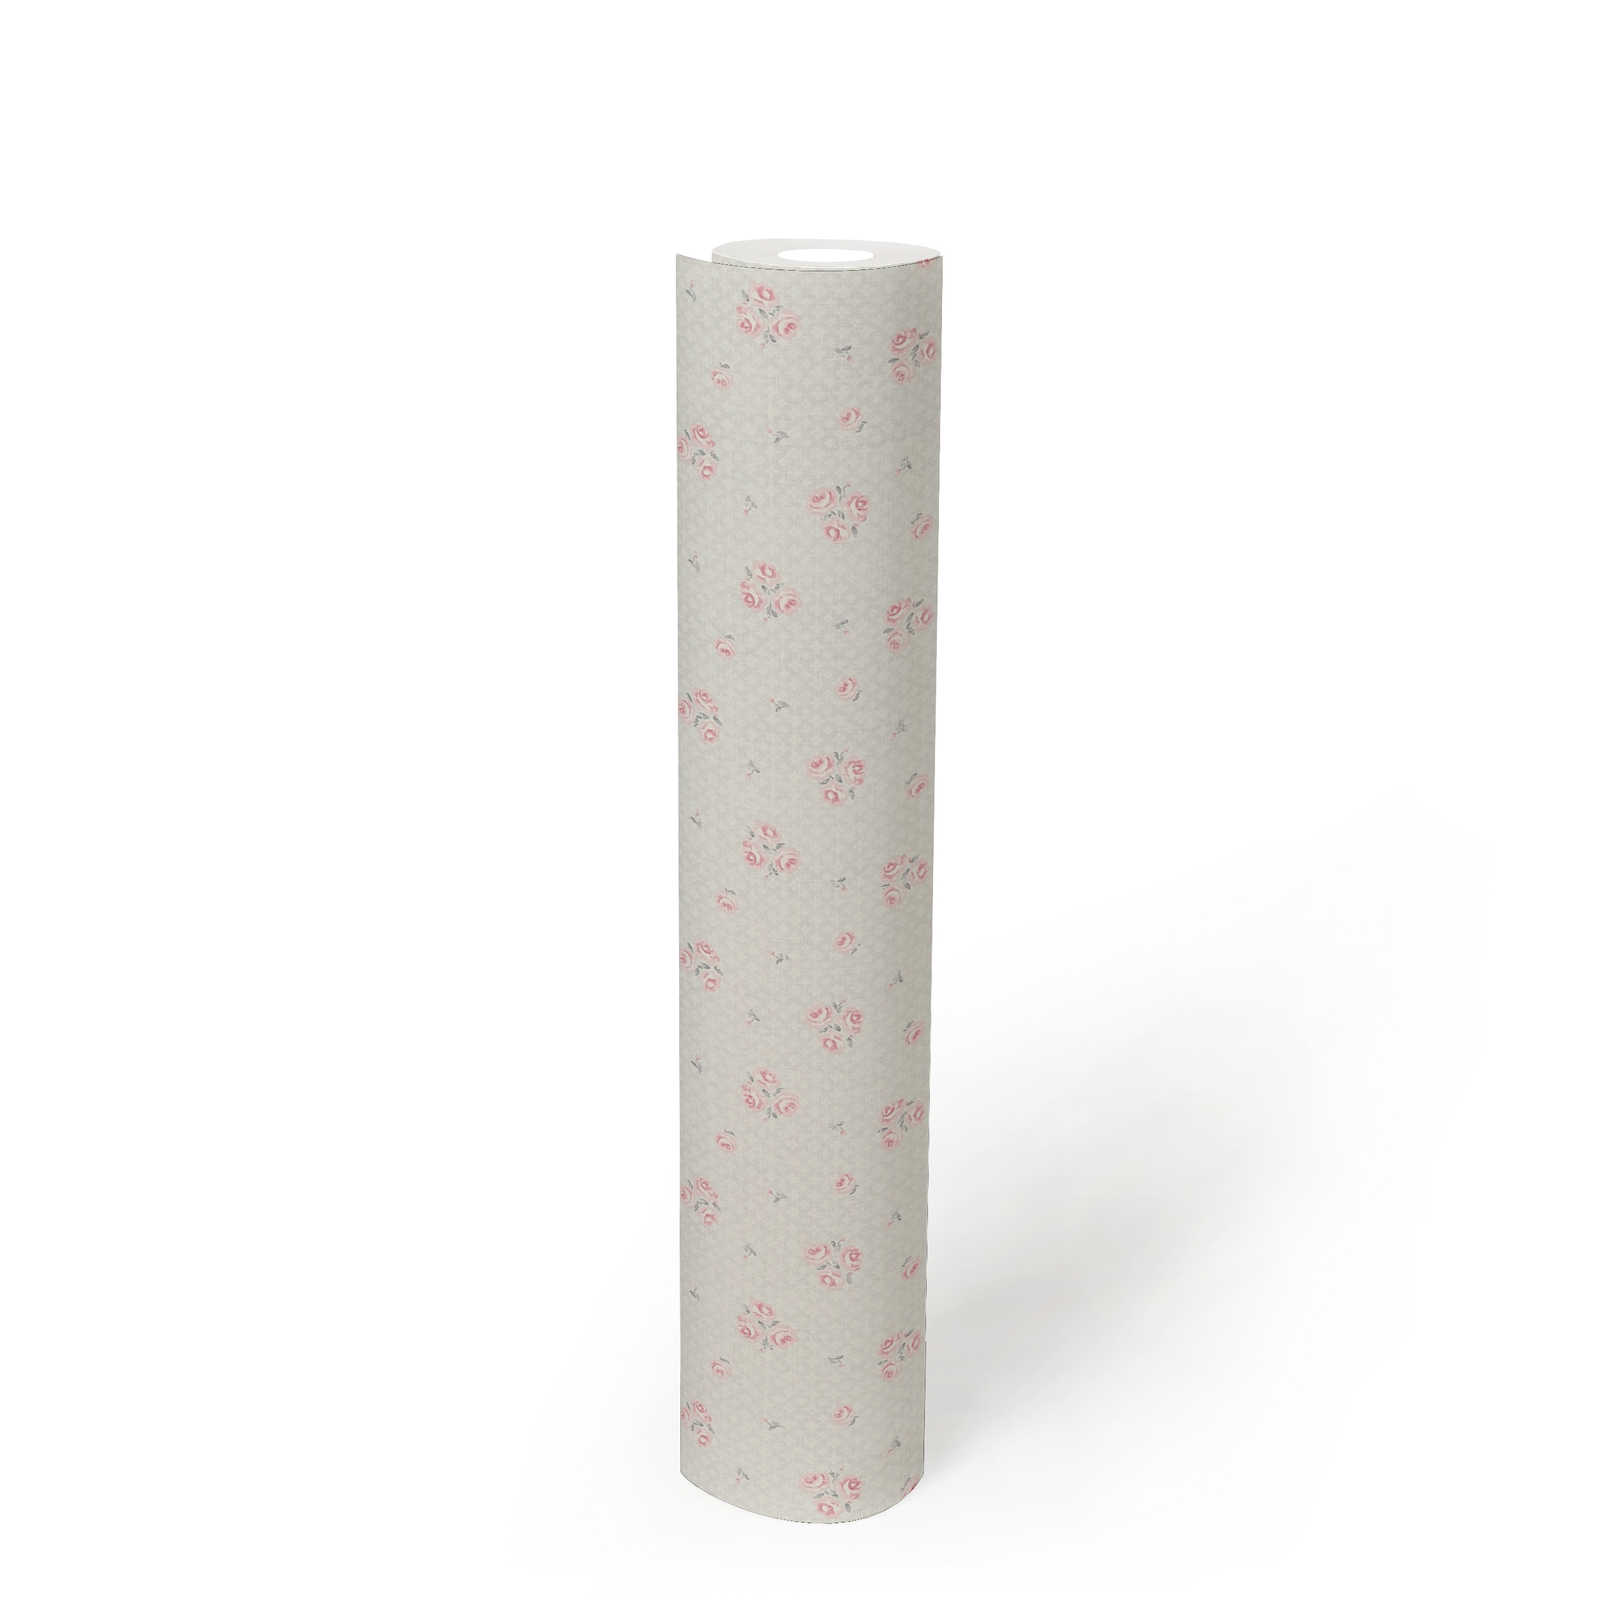             Papel pintado no tejido con fino motivo floral Shabby Chic - gris claro, rojo, blanco
        